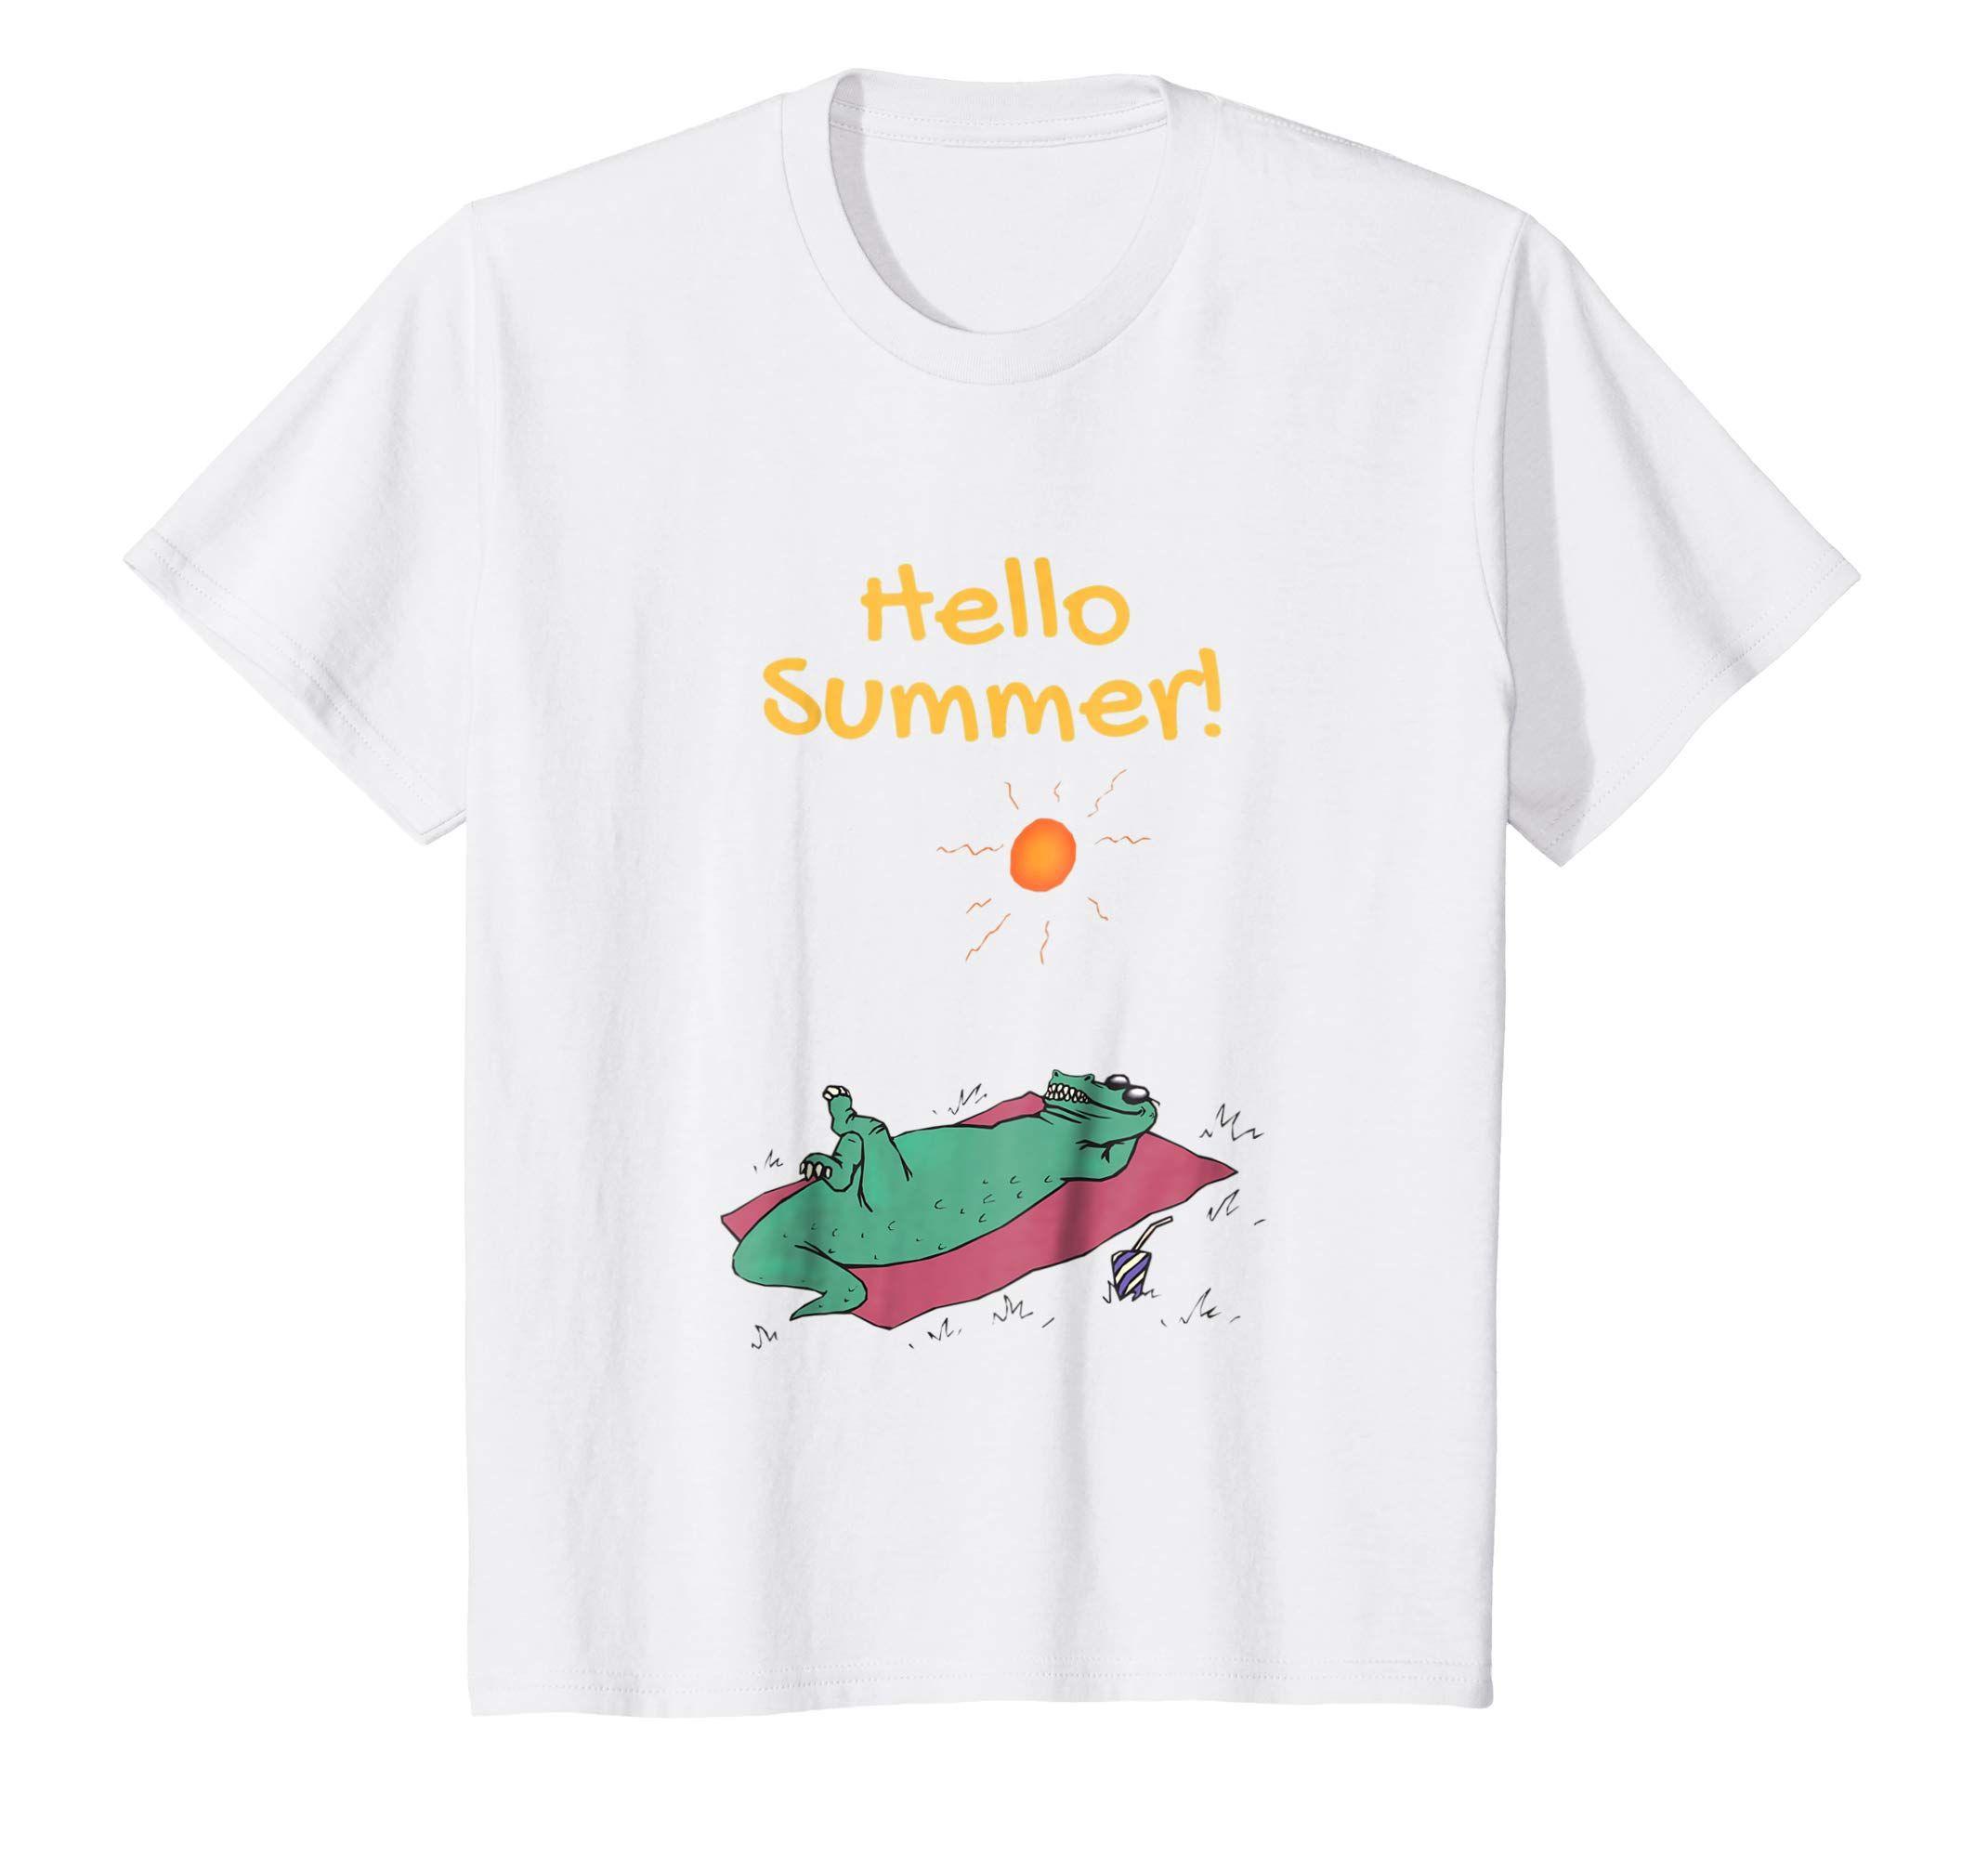 What Company Has Alligator Logo - Amazon.com: Hello Summer! Fun Alligator at the Beach T Shirt: Clothing